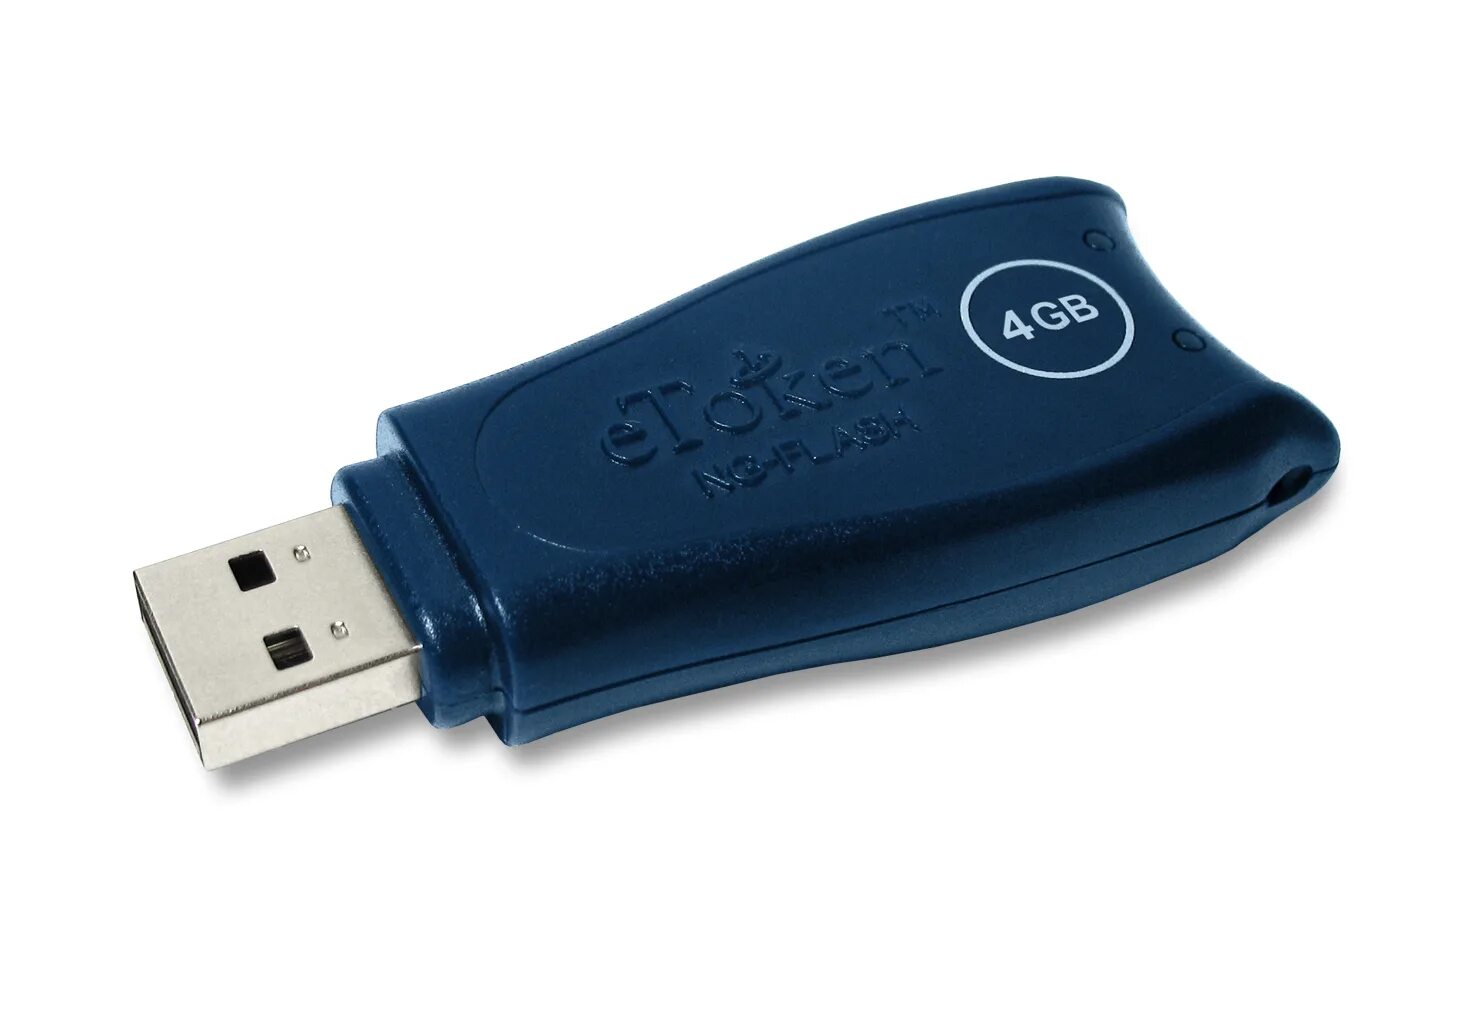 Iq50 токен. ETOKEN Pass брелок. ETOKEN 5110. USB-флеш-накопитель ETOKEN. Комбинированный USB-ключ ETOKEN ng-Flash.